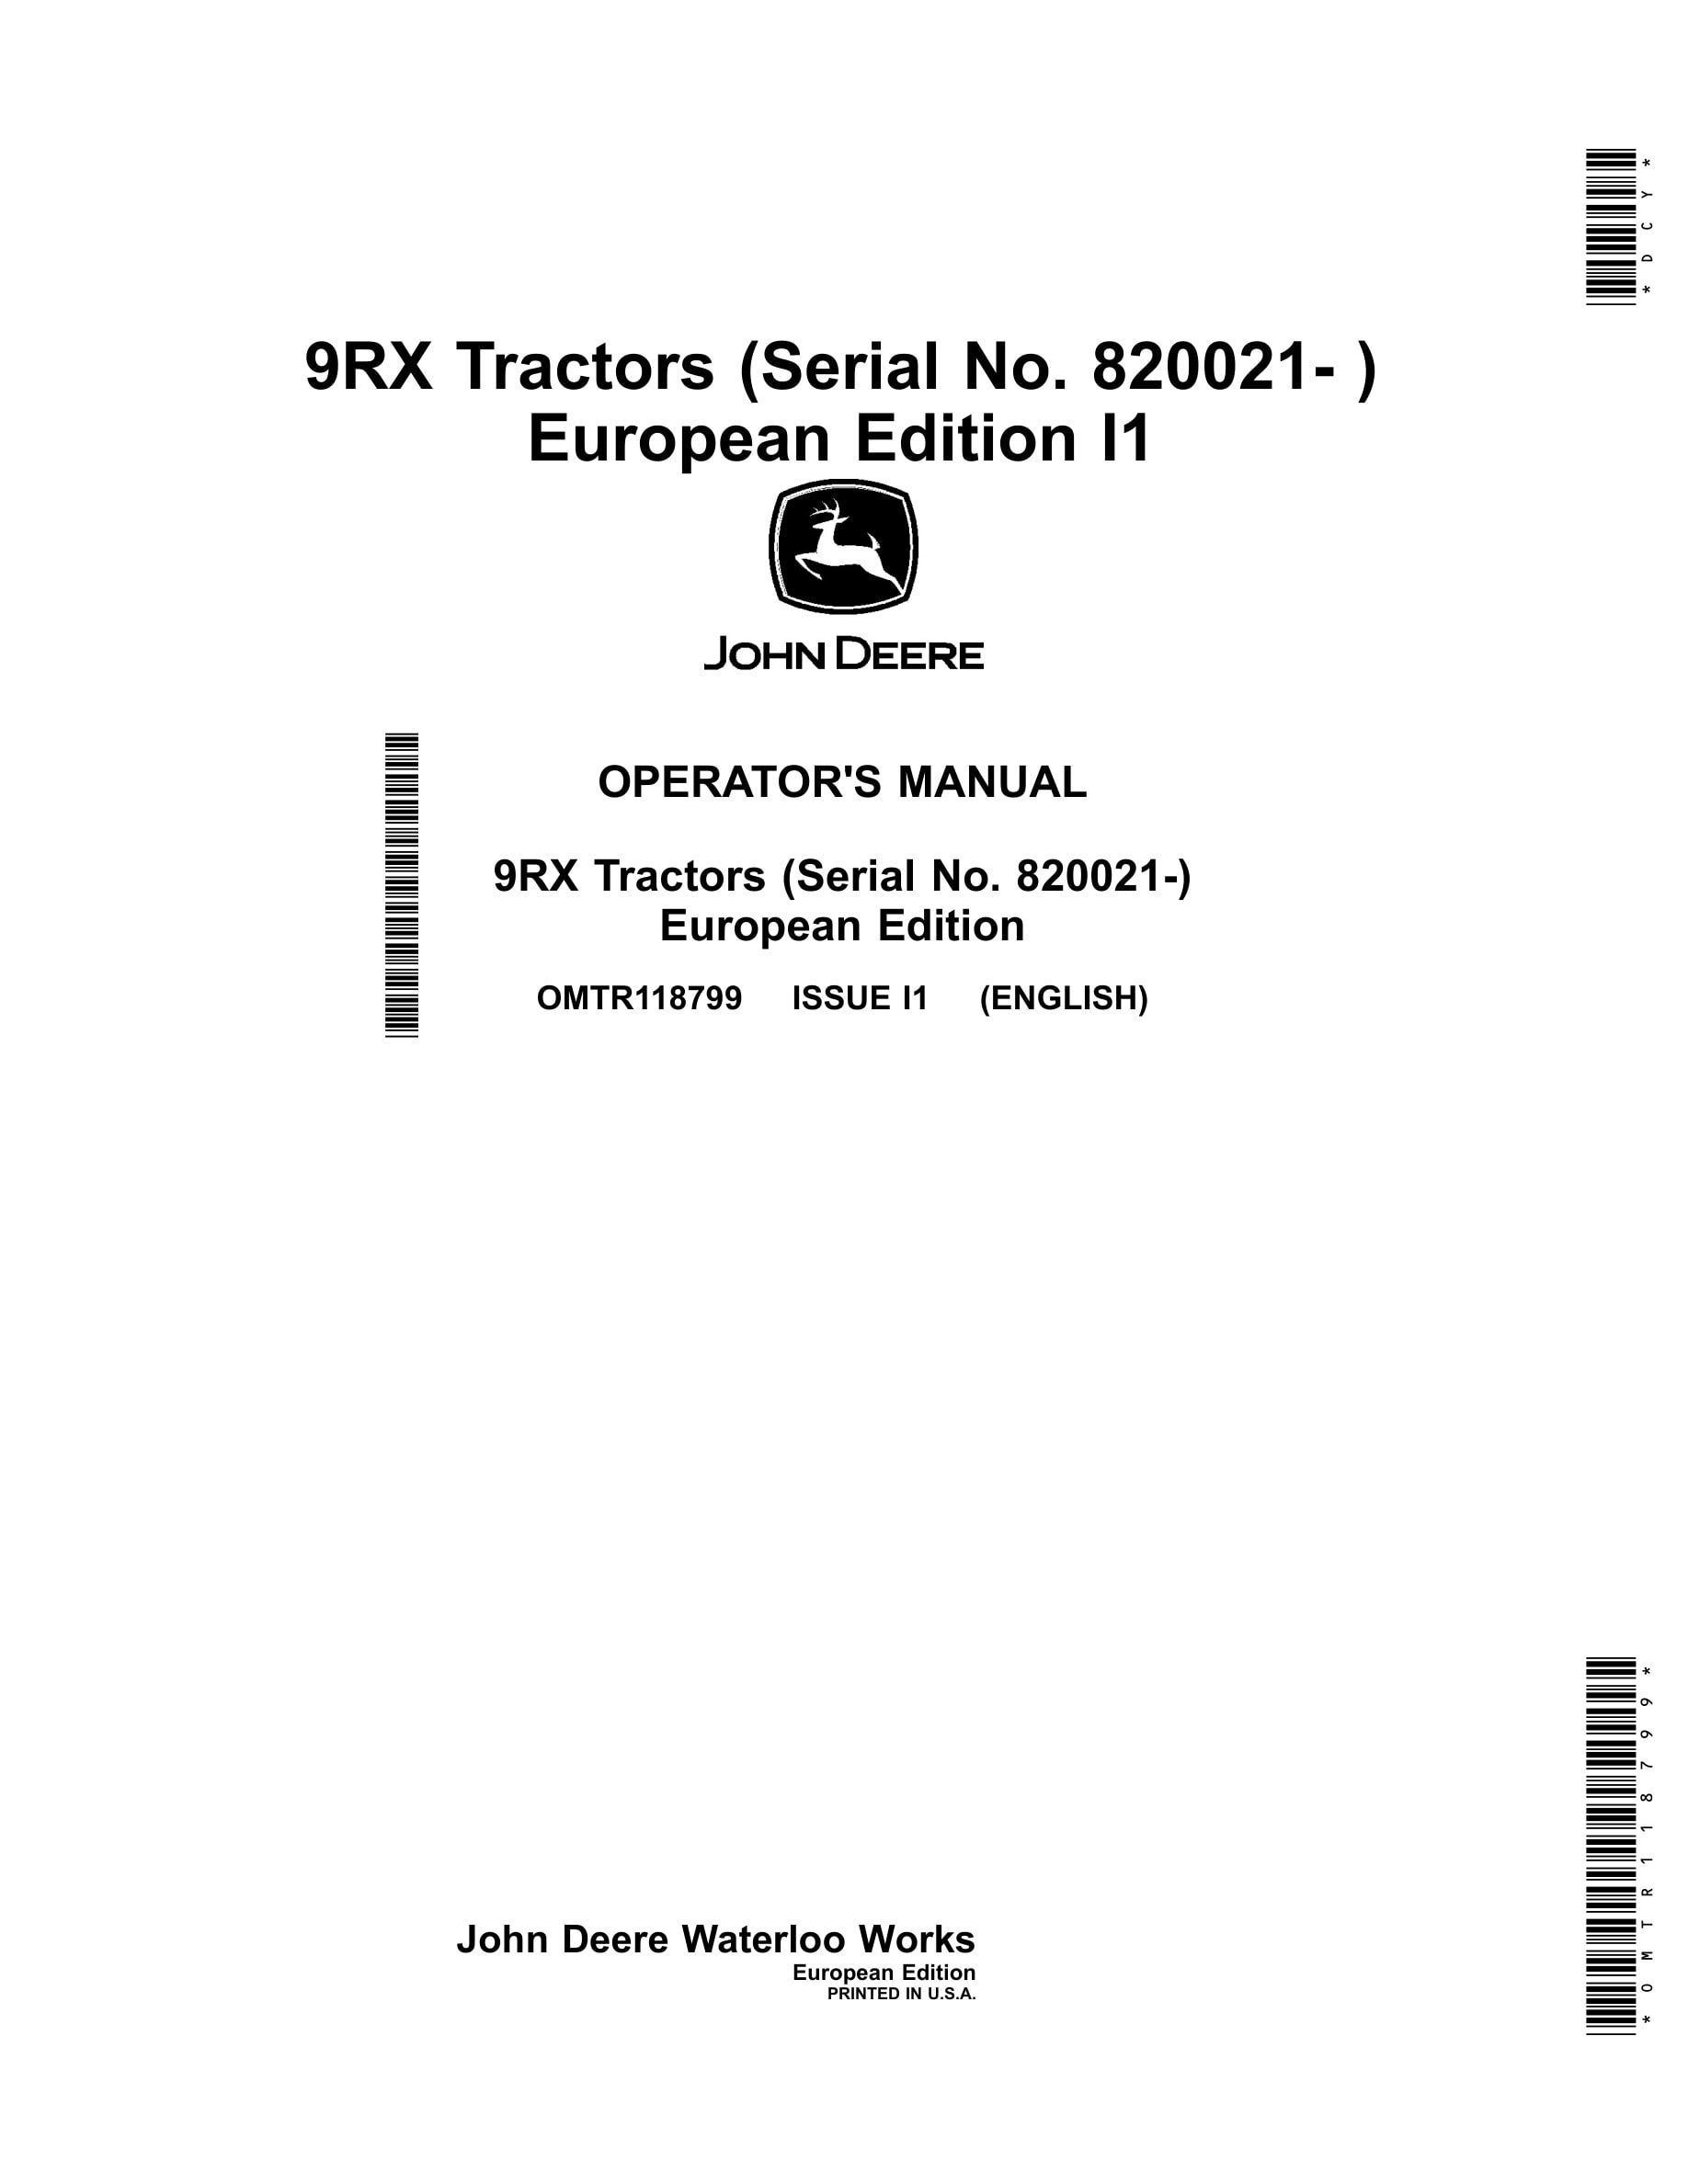 John Deere 9rx Tractors Operator Manuals OMTR118799-1